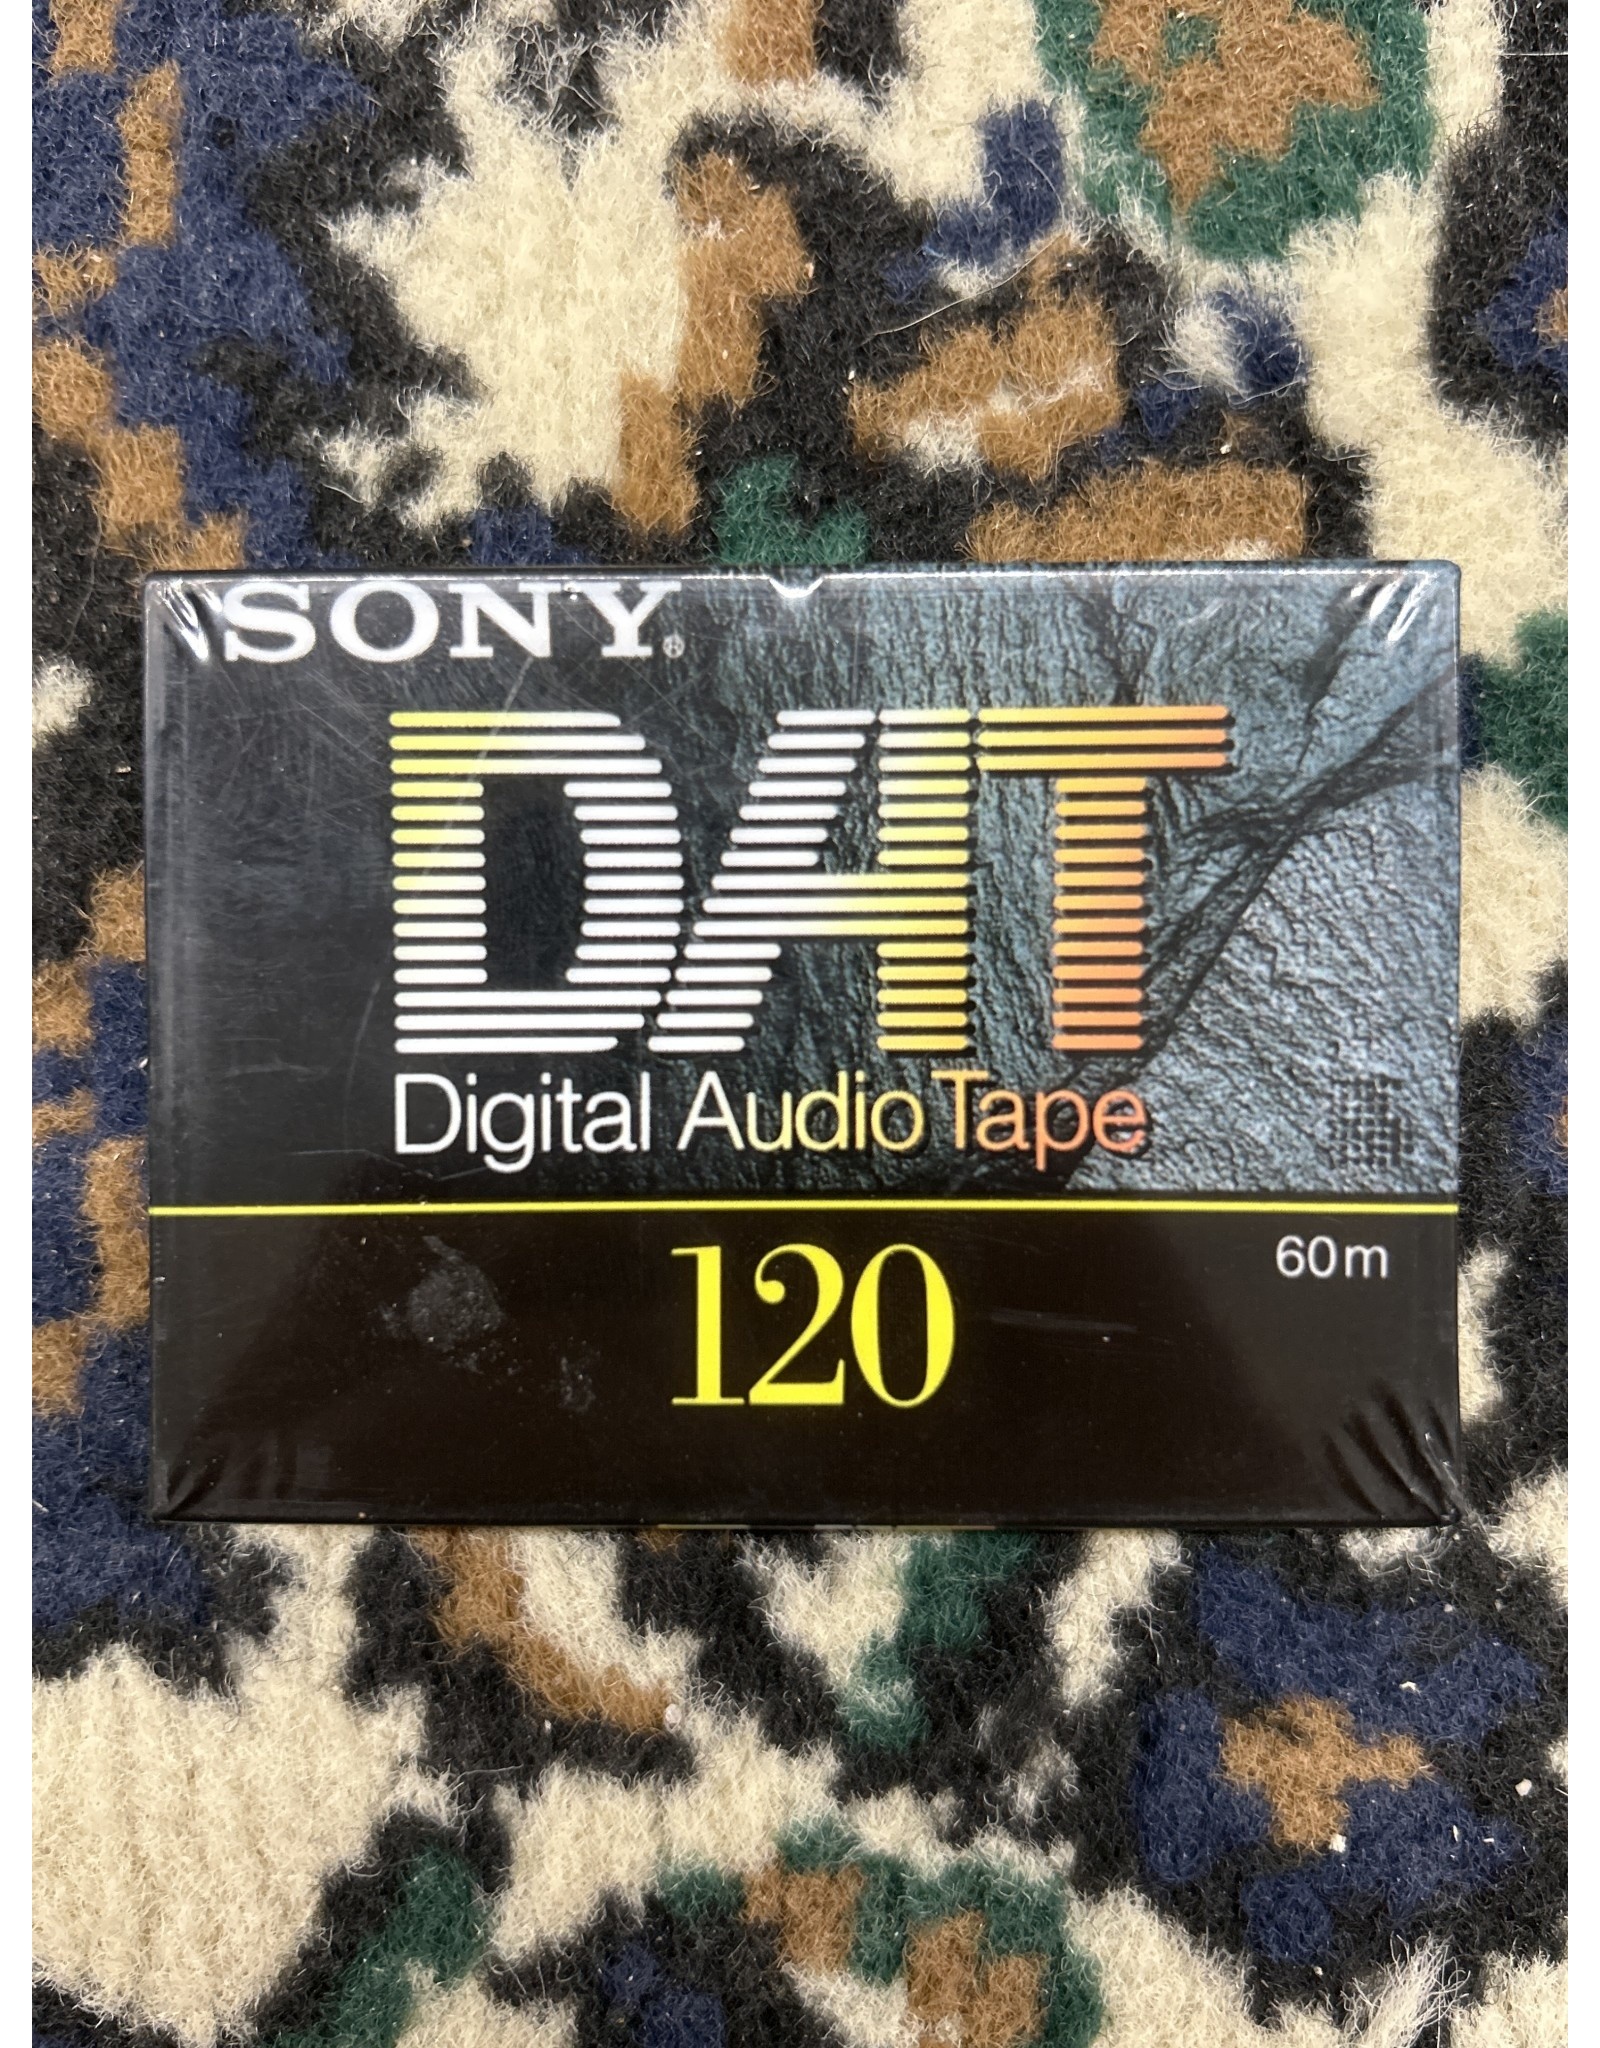 Sony Sony DT-120RA 60m Digital Audio Tapes